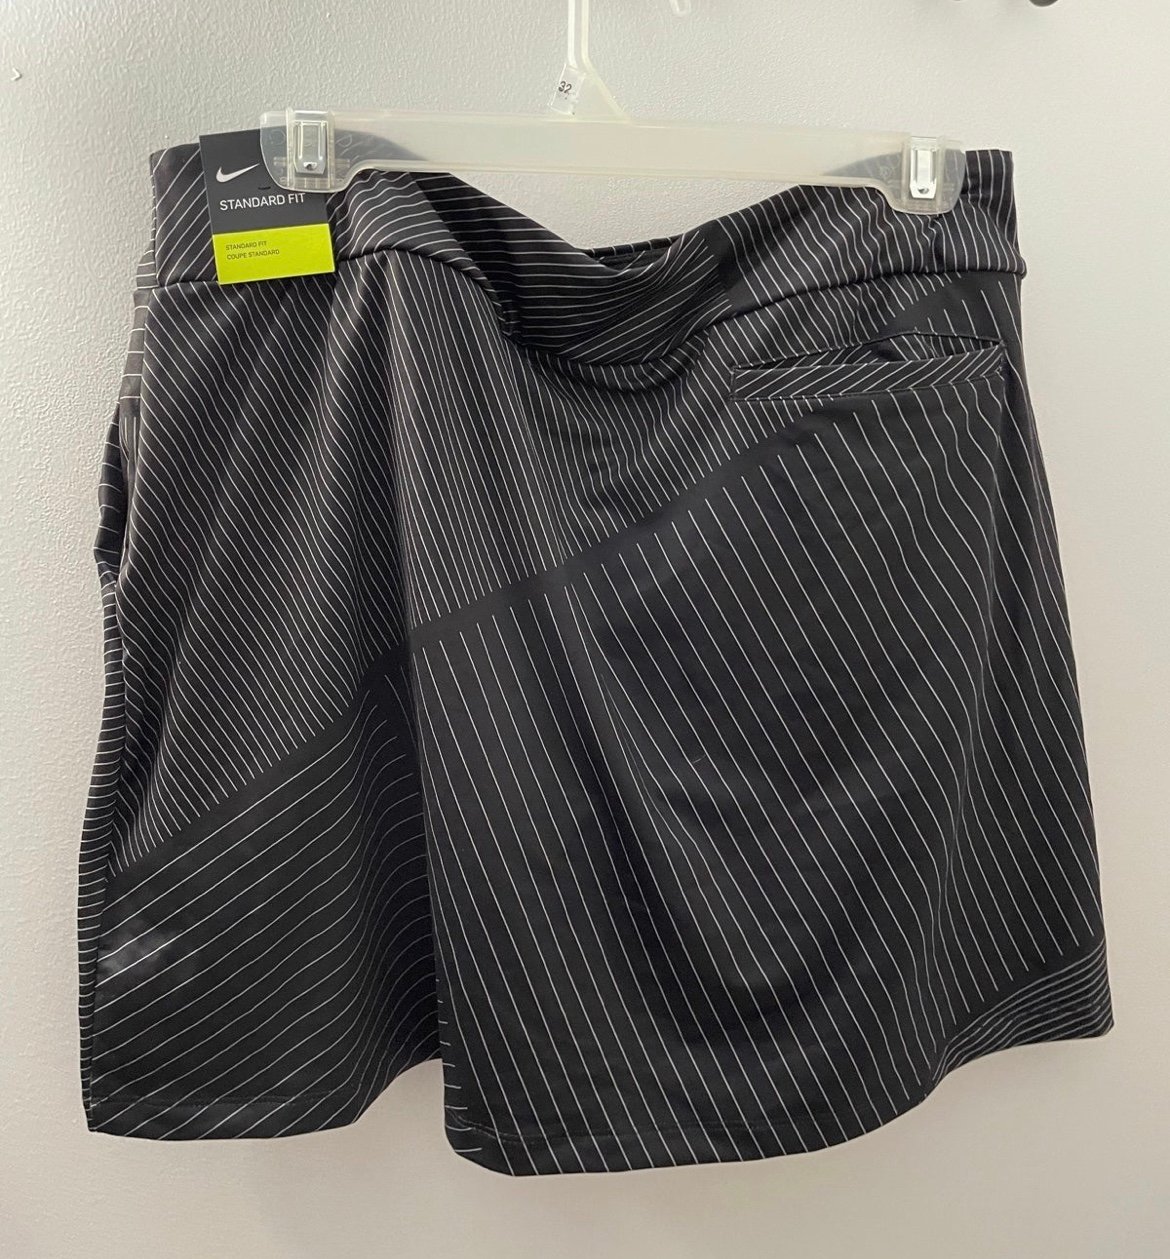 high discount Nike Tennis Skirt / Skort - Size L m2HAj79PC well sale